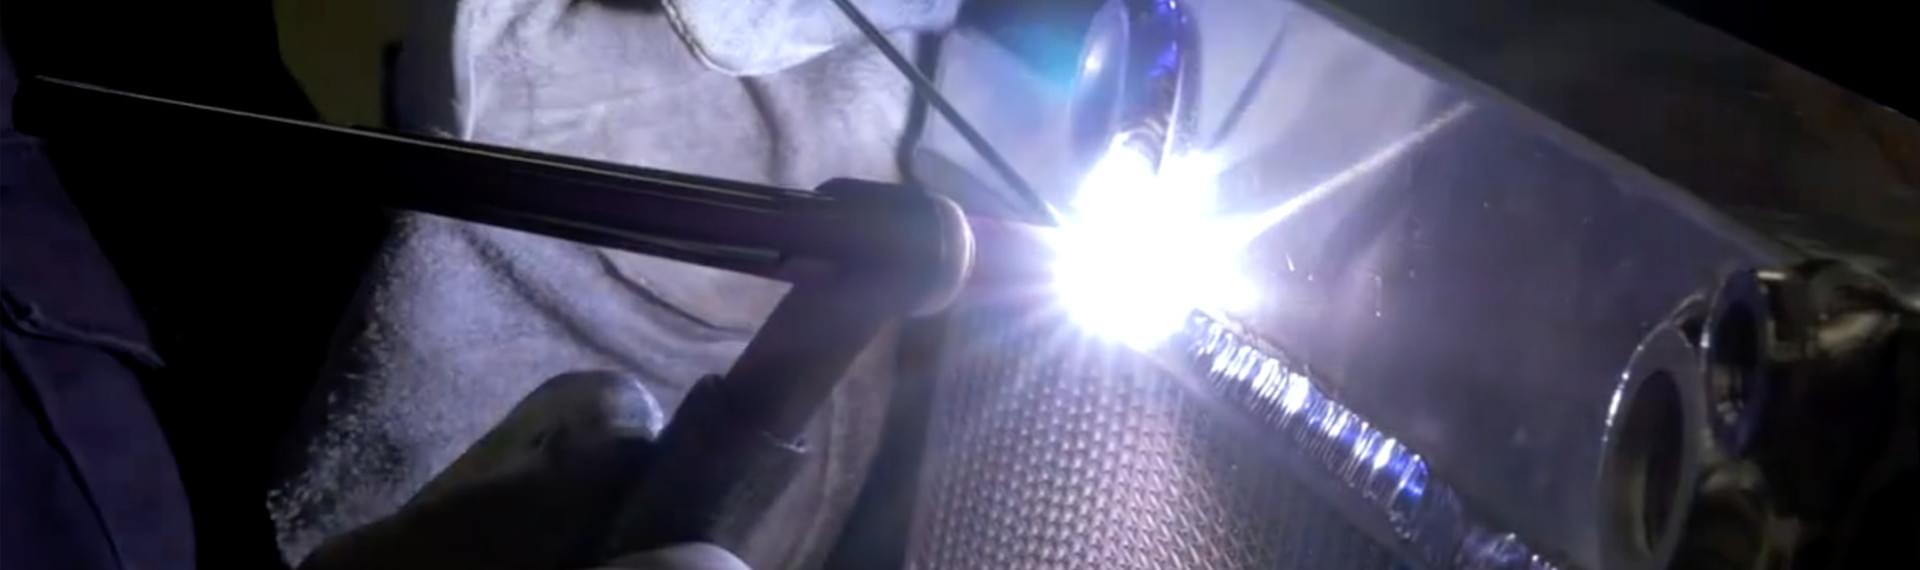 Heavy duty welding of aluminum industrial radiator